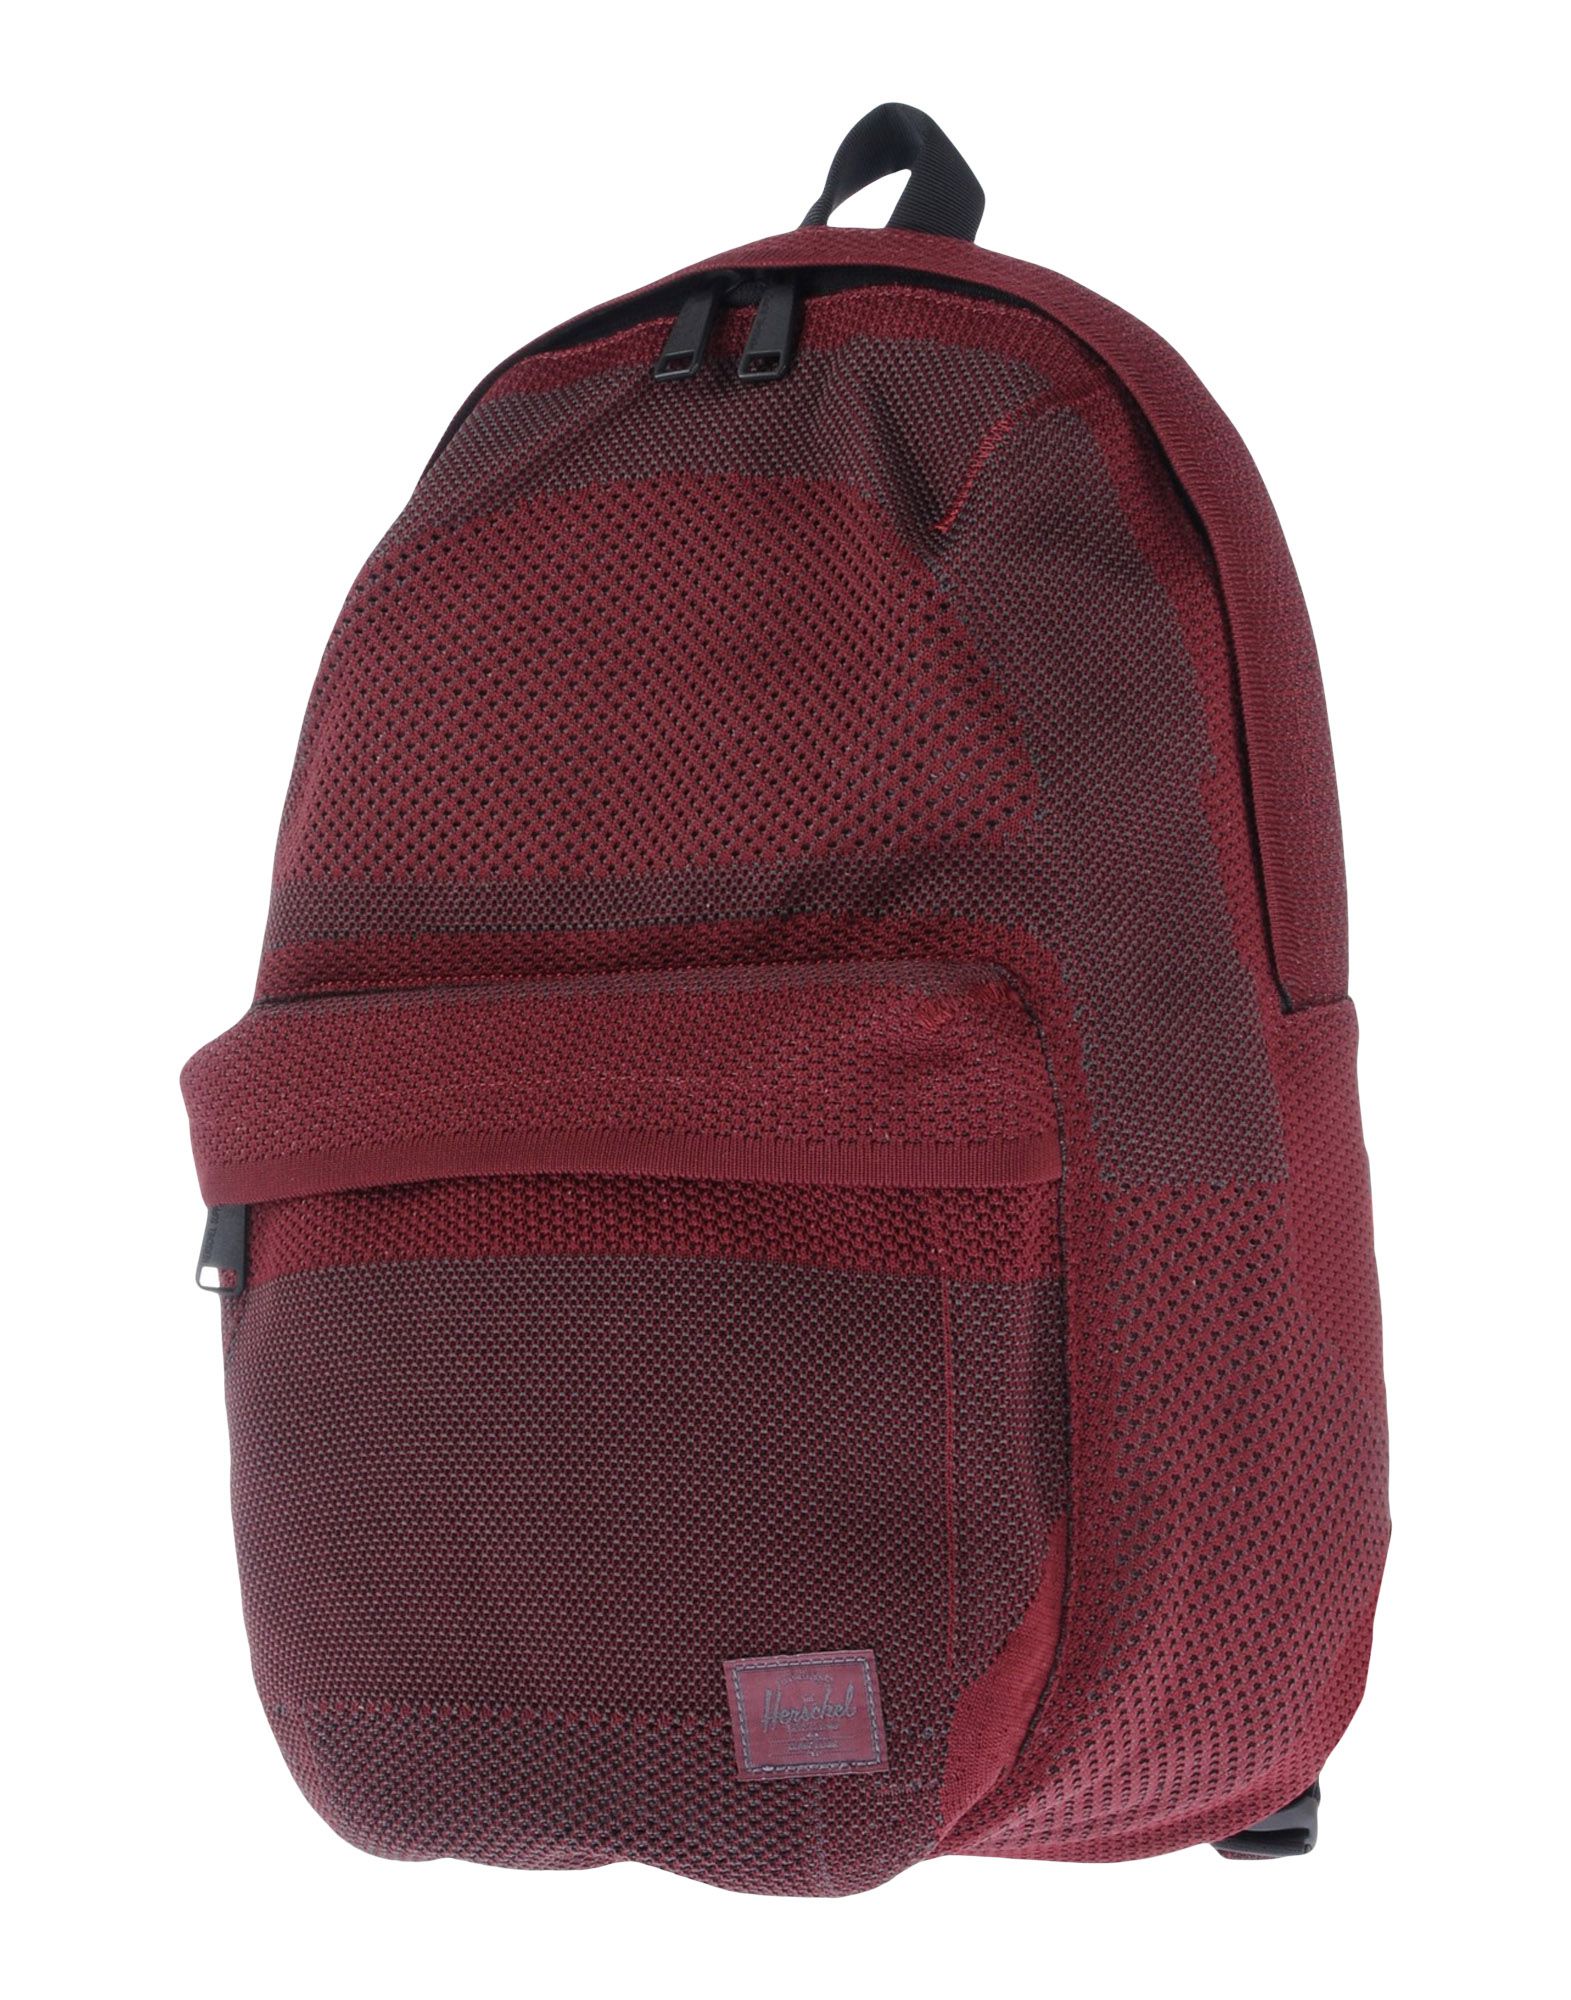 HERSCHEL SUPPLY CO Backpack & fanny pack,45403001DW 1